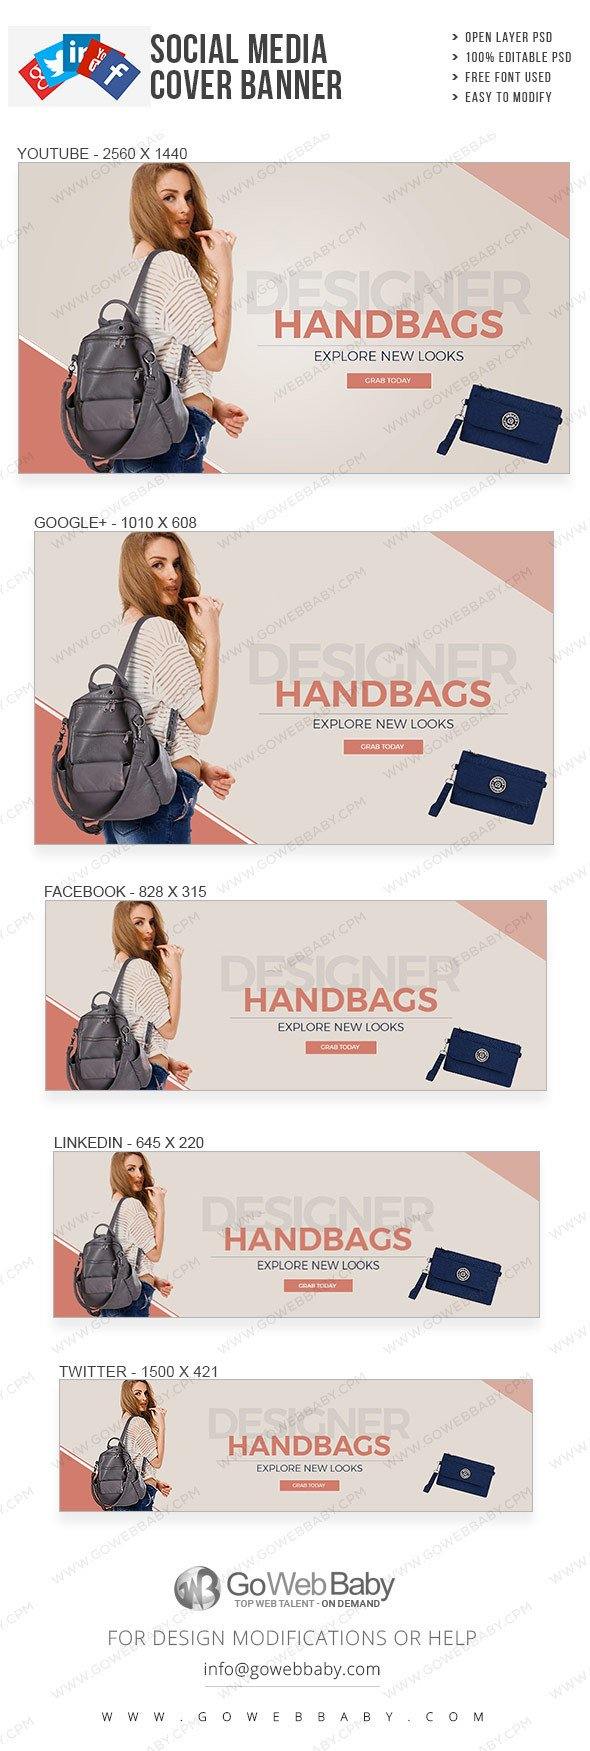 Social Media Cover Banner - Designer Handbags For Website Marketing - GoWebBaby.Com